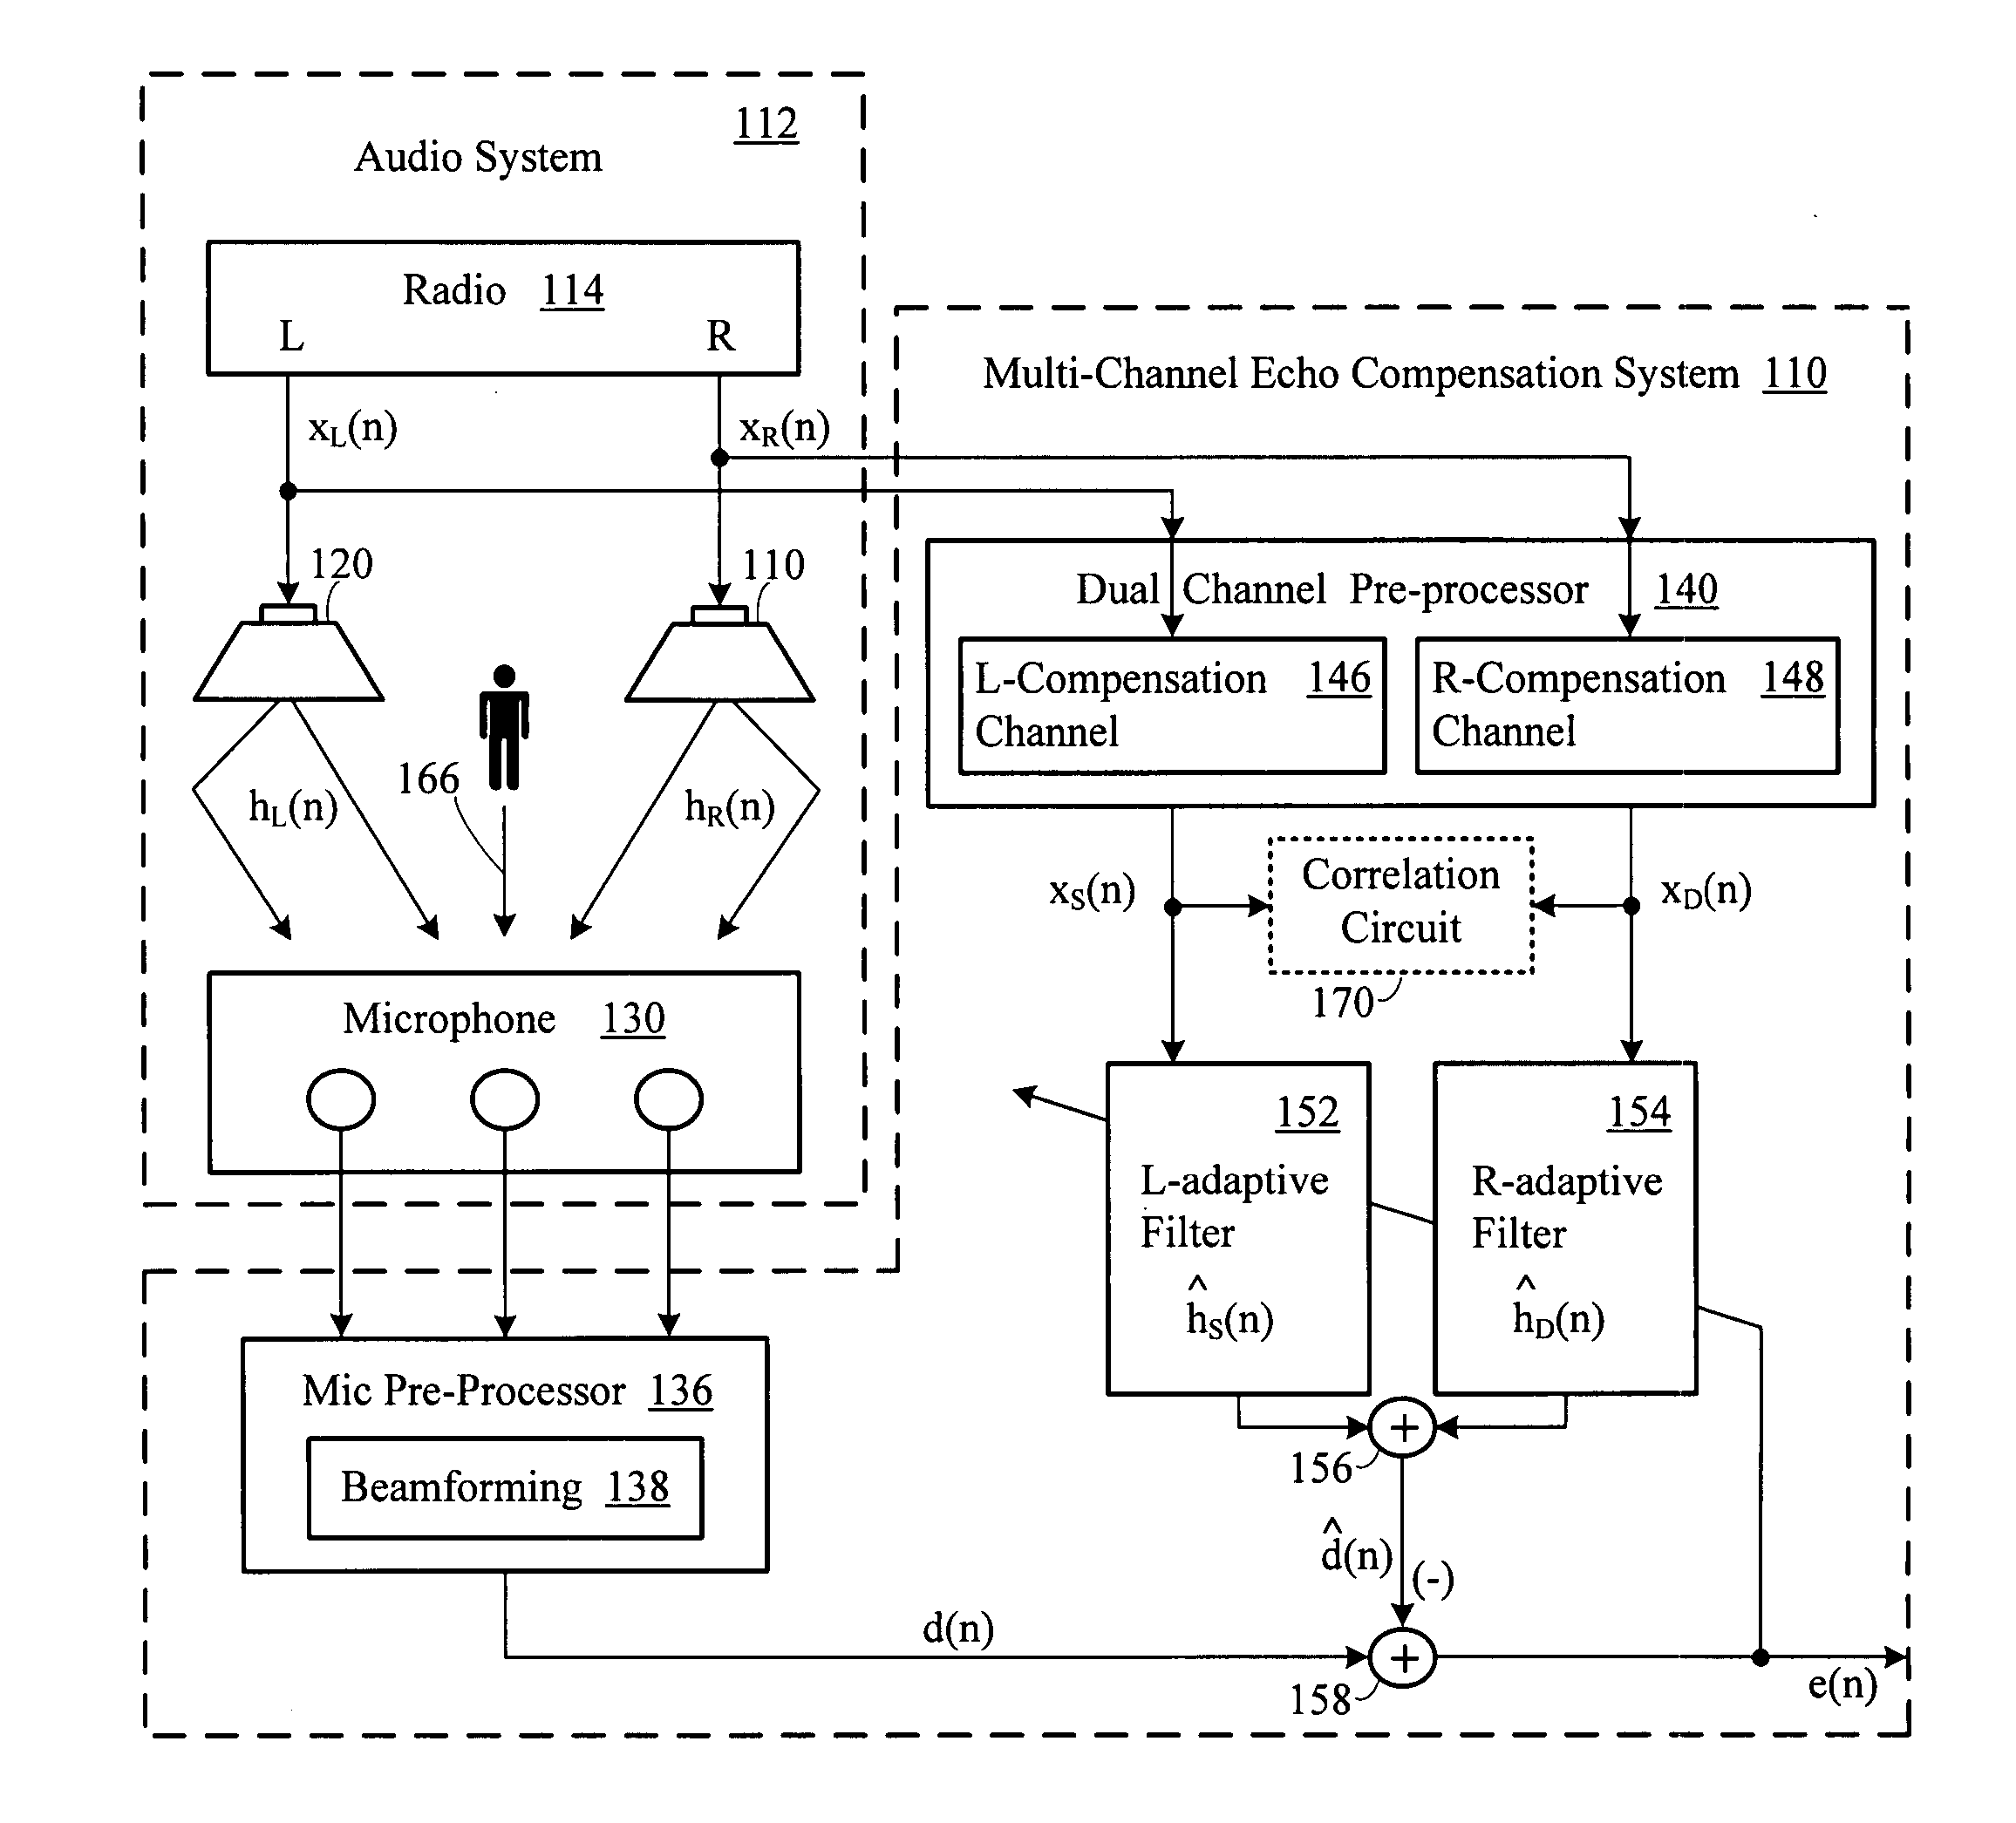 Multi-channel echo compensation system